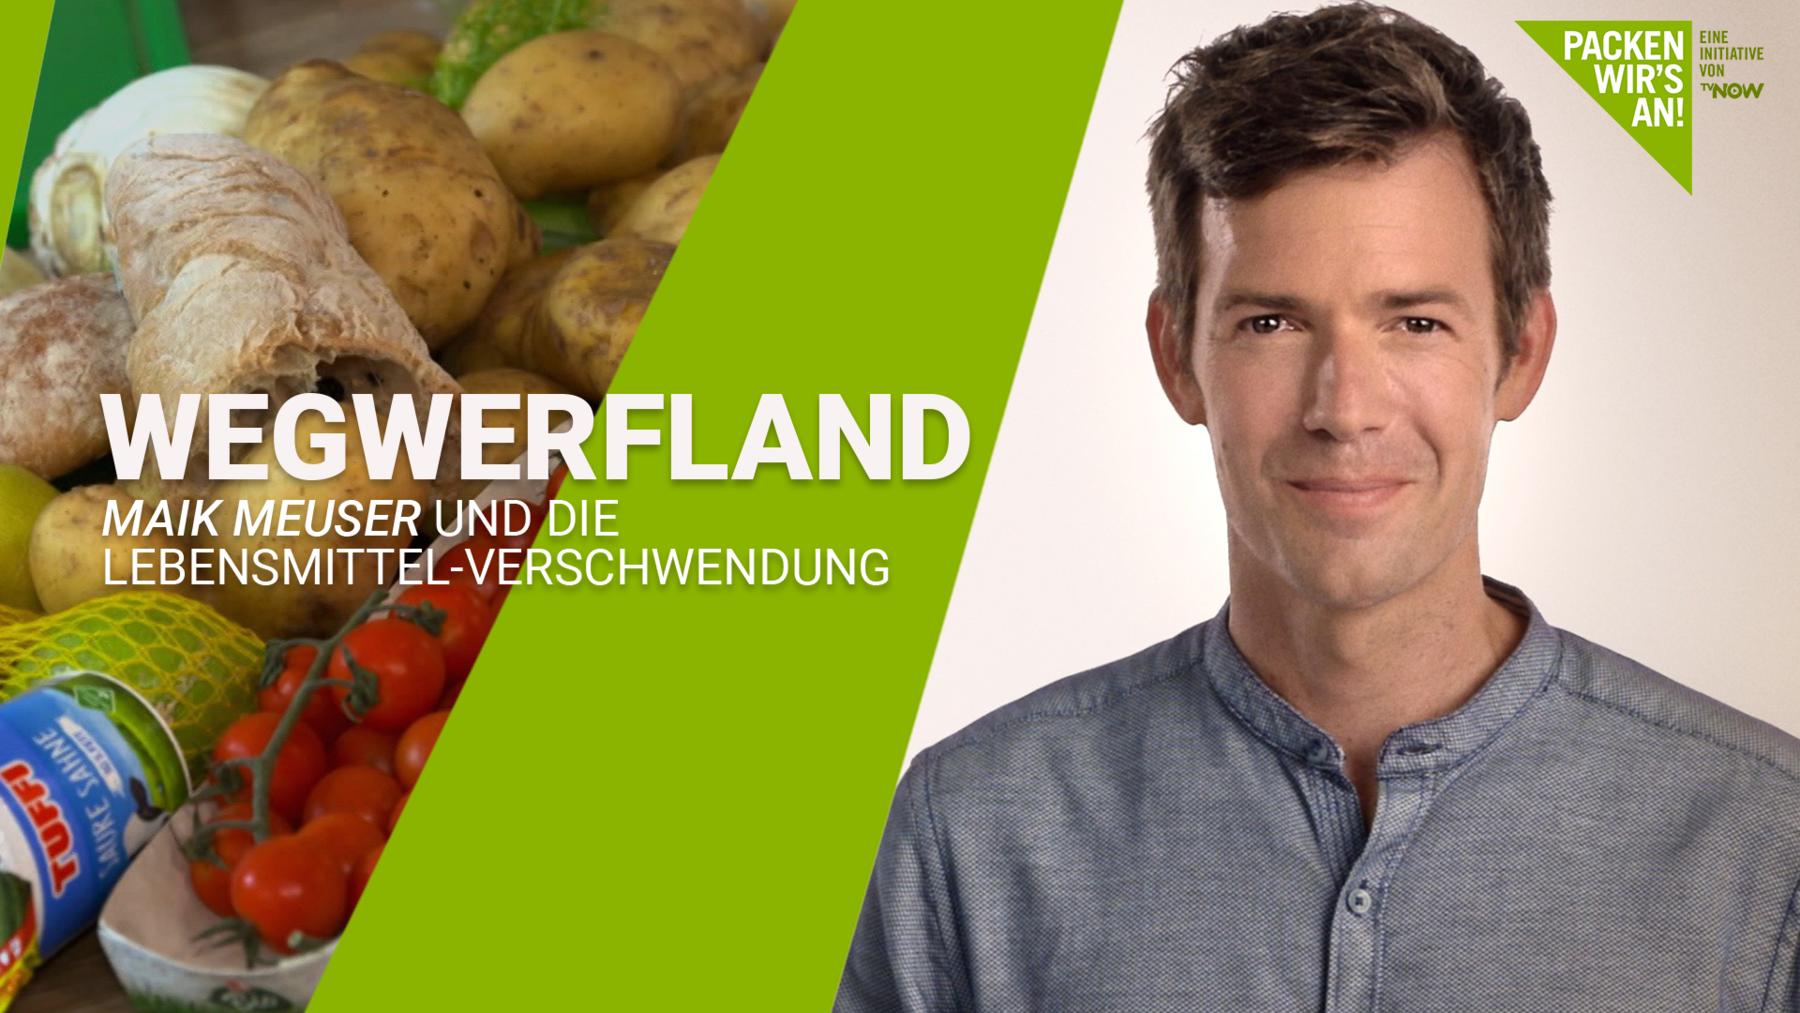 Wegwerfland - Maik Meuser und die Lebensmittel-Verschwendung